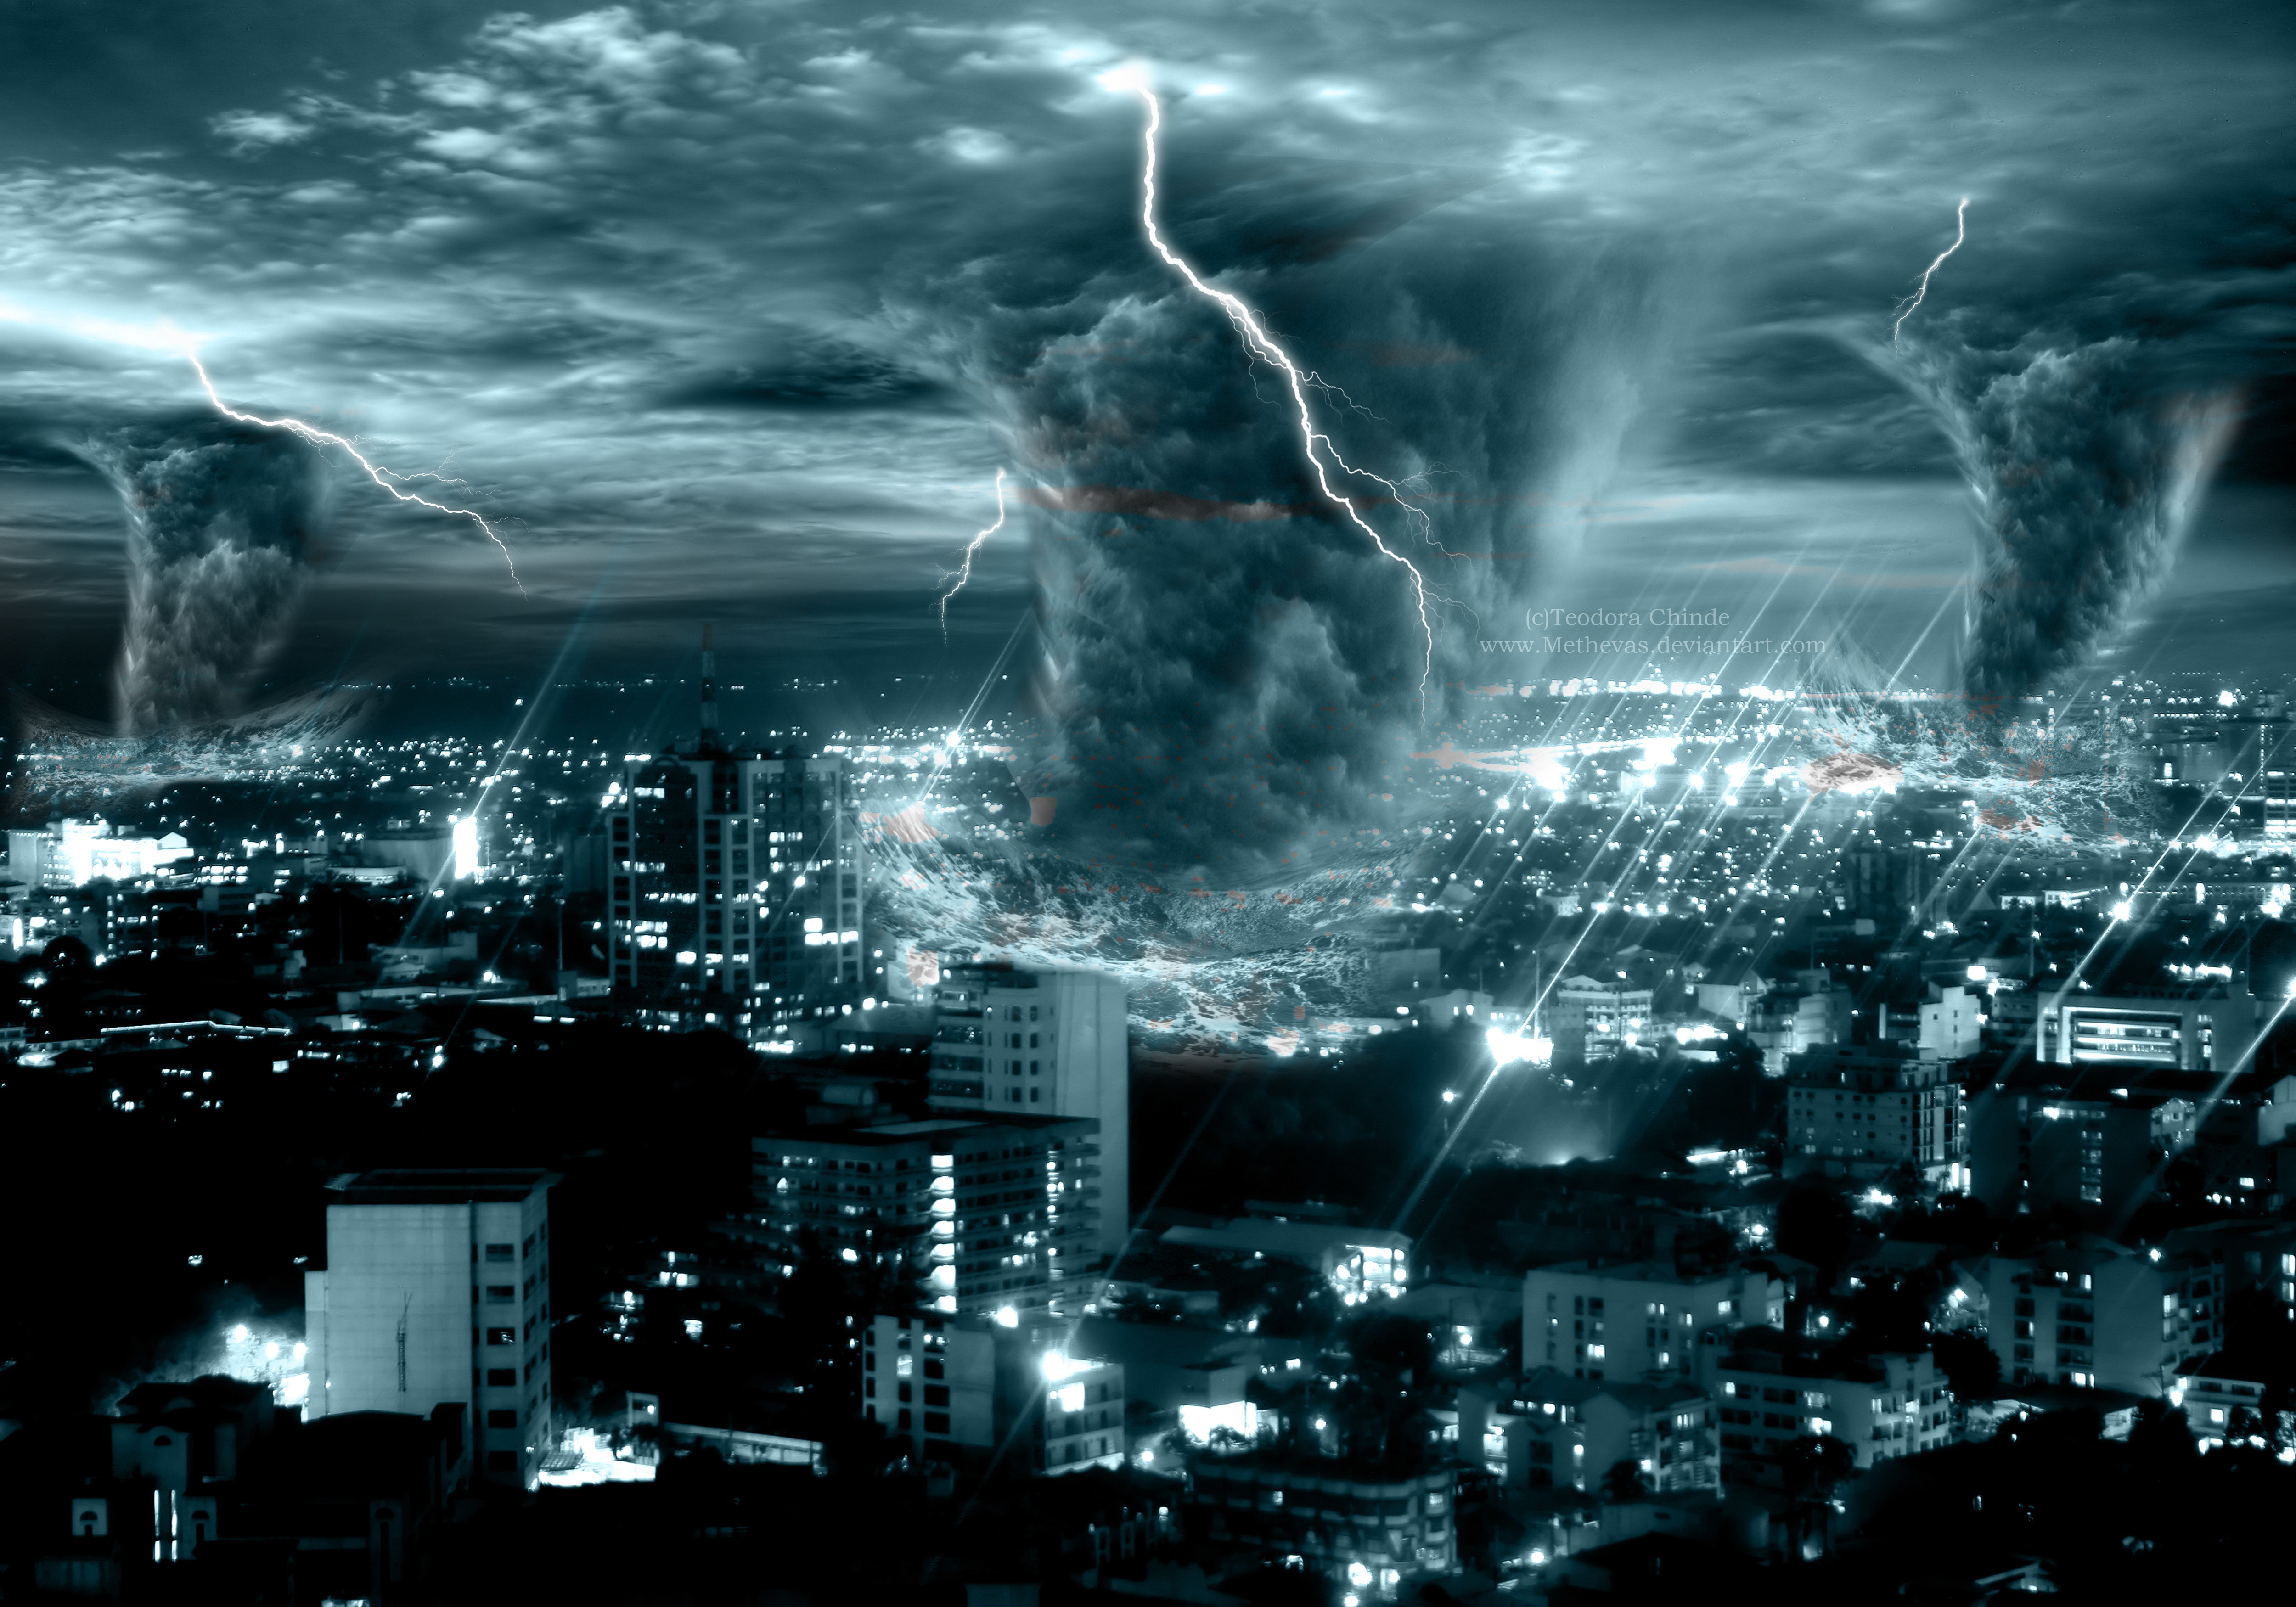 tornadoes, lightning - desktop wallpaper